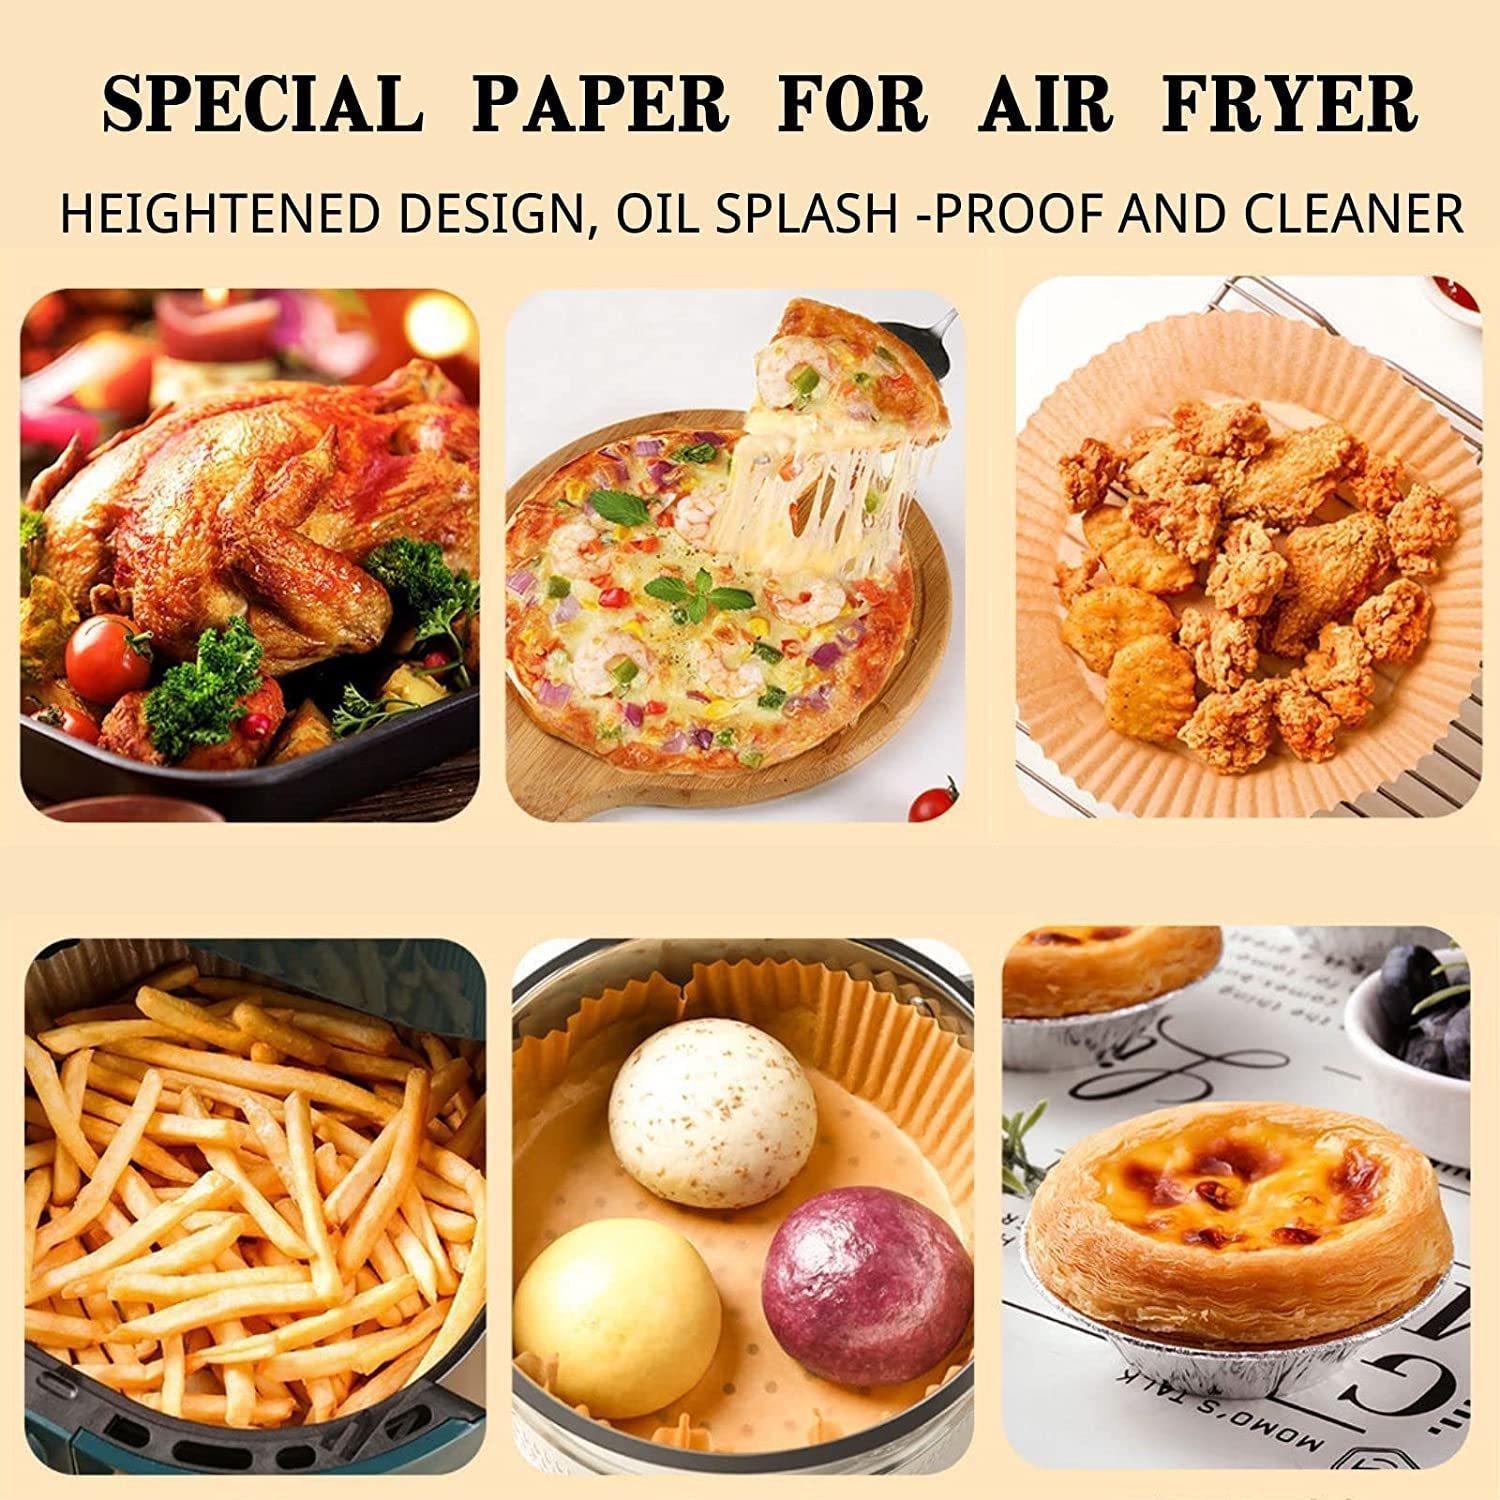 Air Fryer Liners Disposable Parchment Sheet 100pcs-6.3 Inches